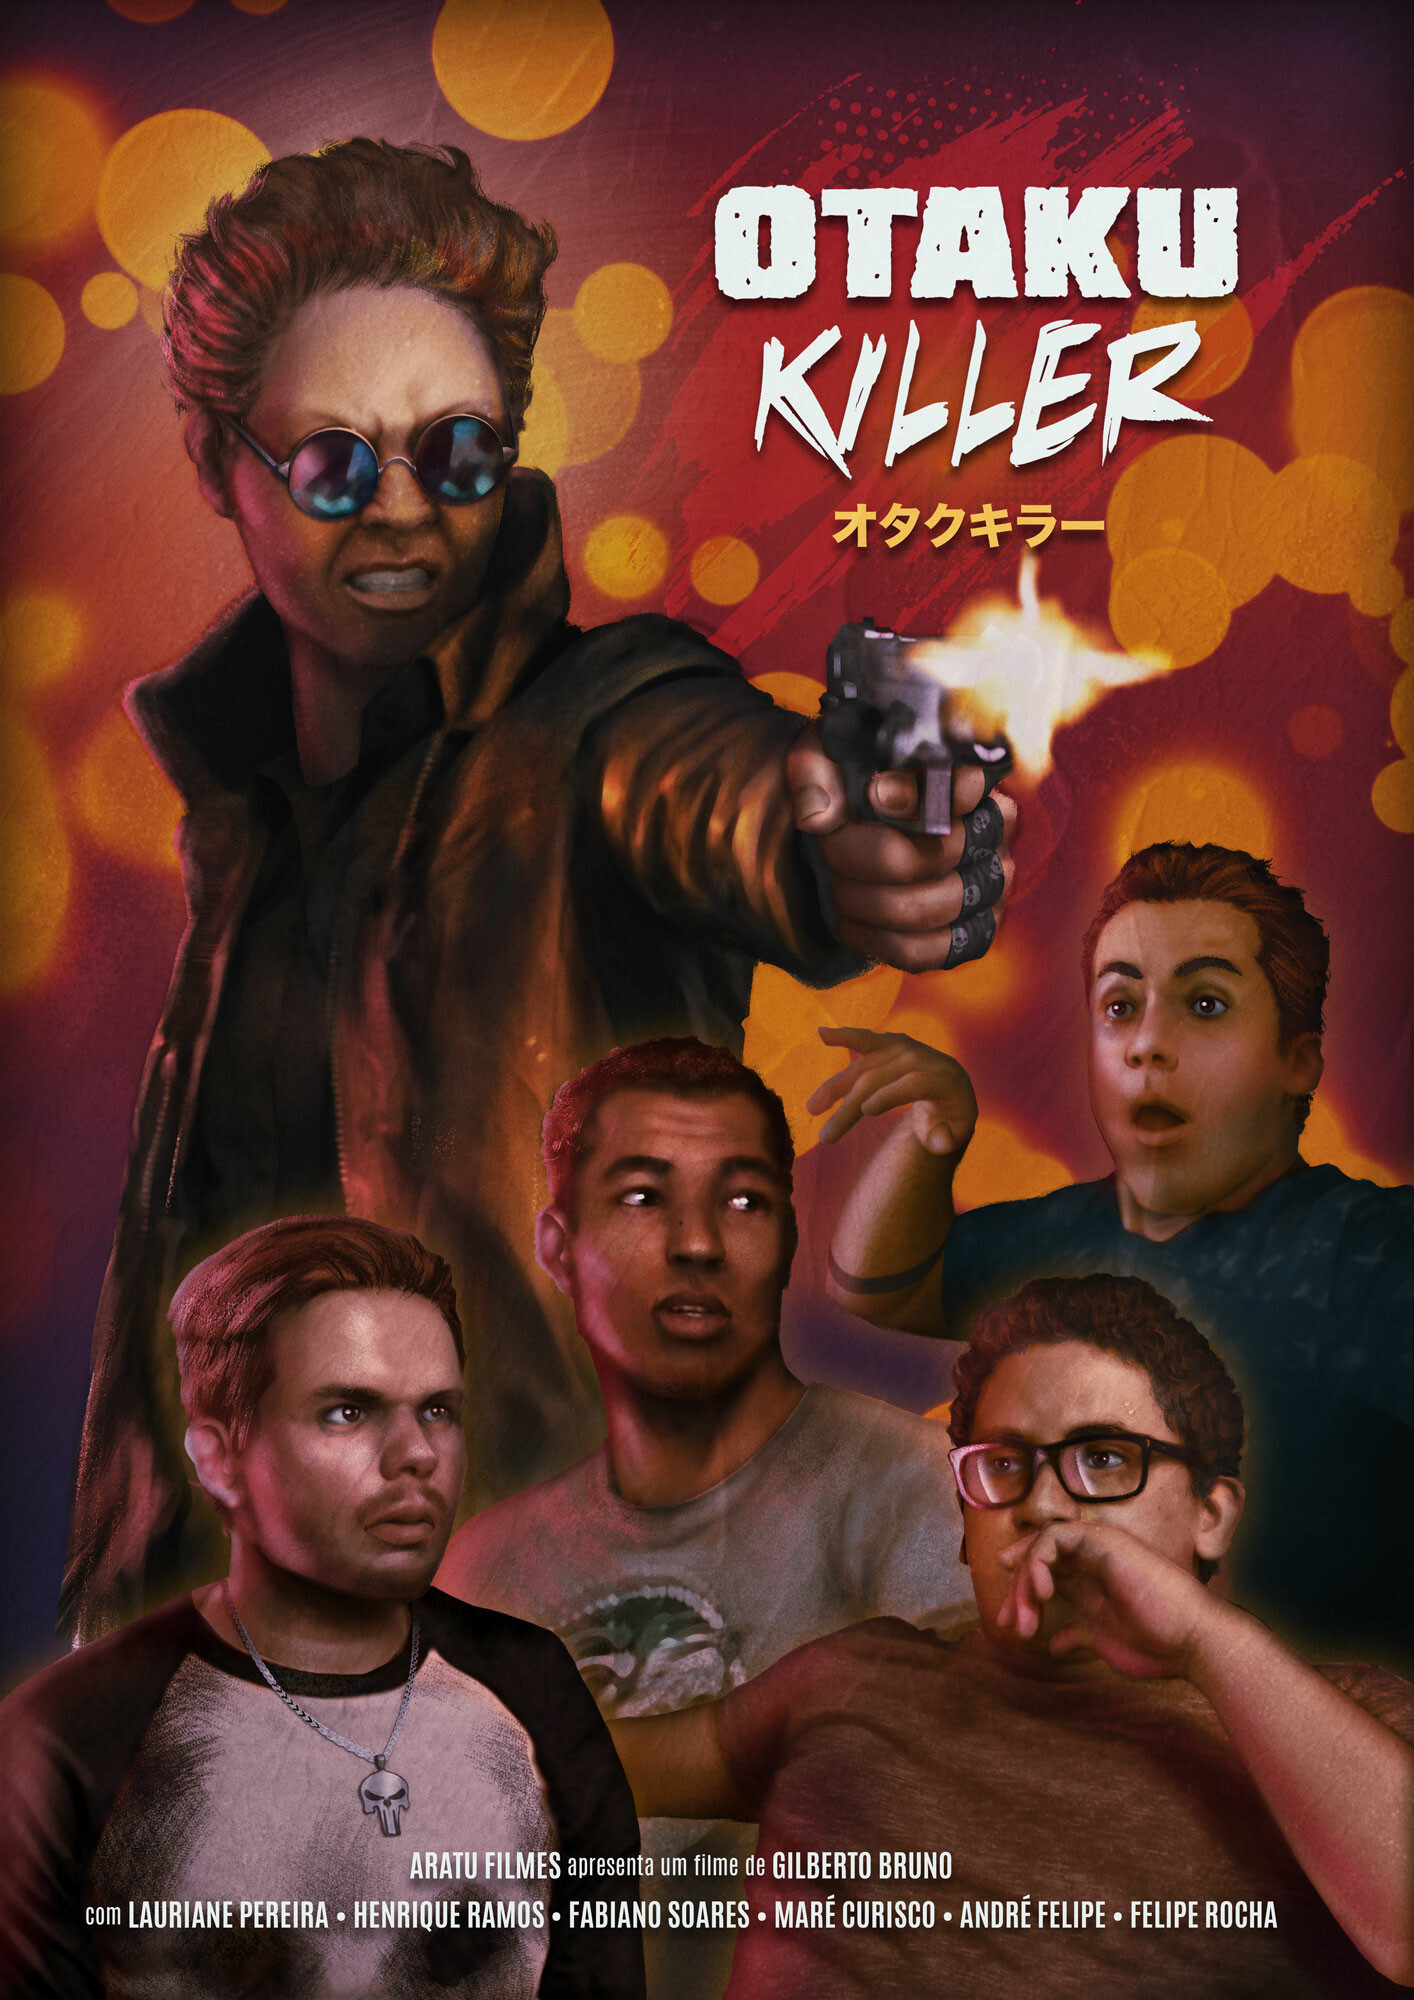 the killer movie poster